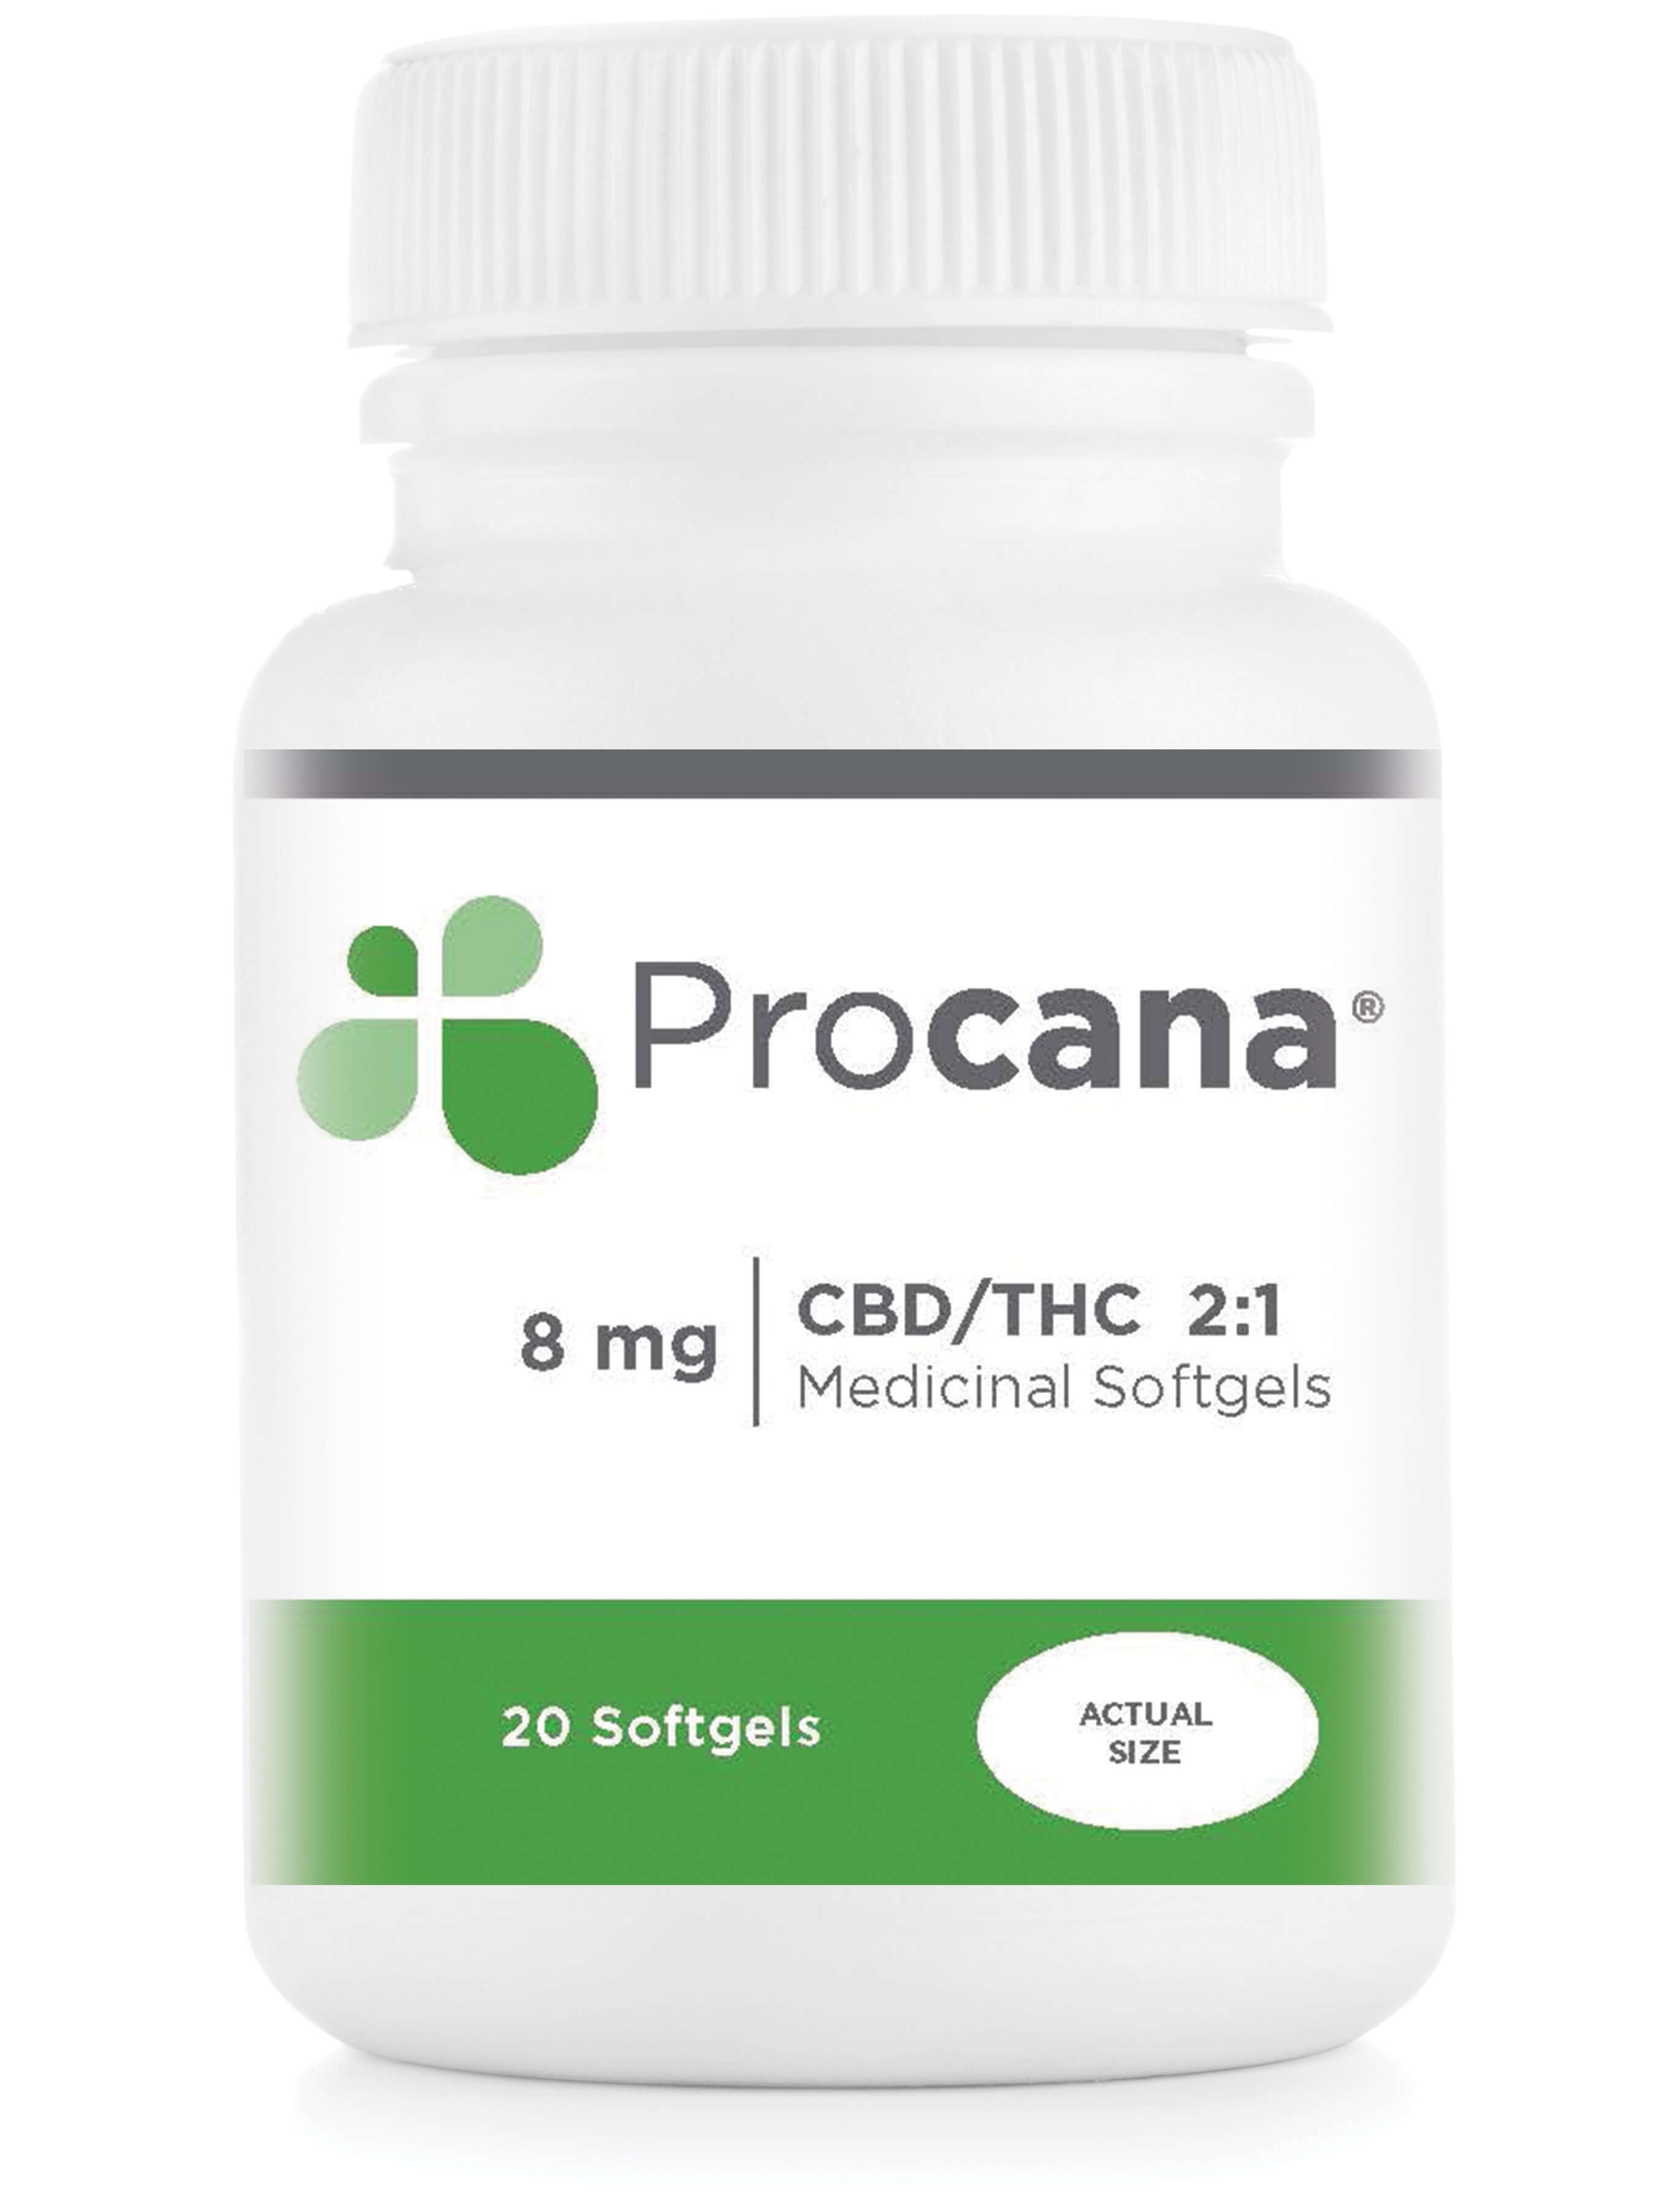 Procana Softgels- CBD/THC 2:1